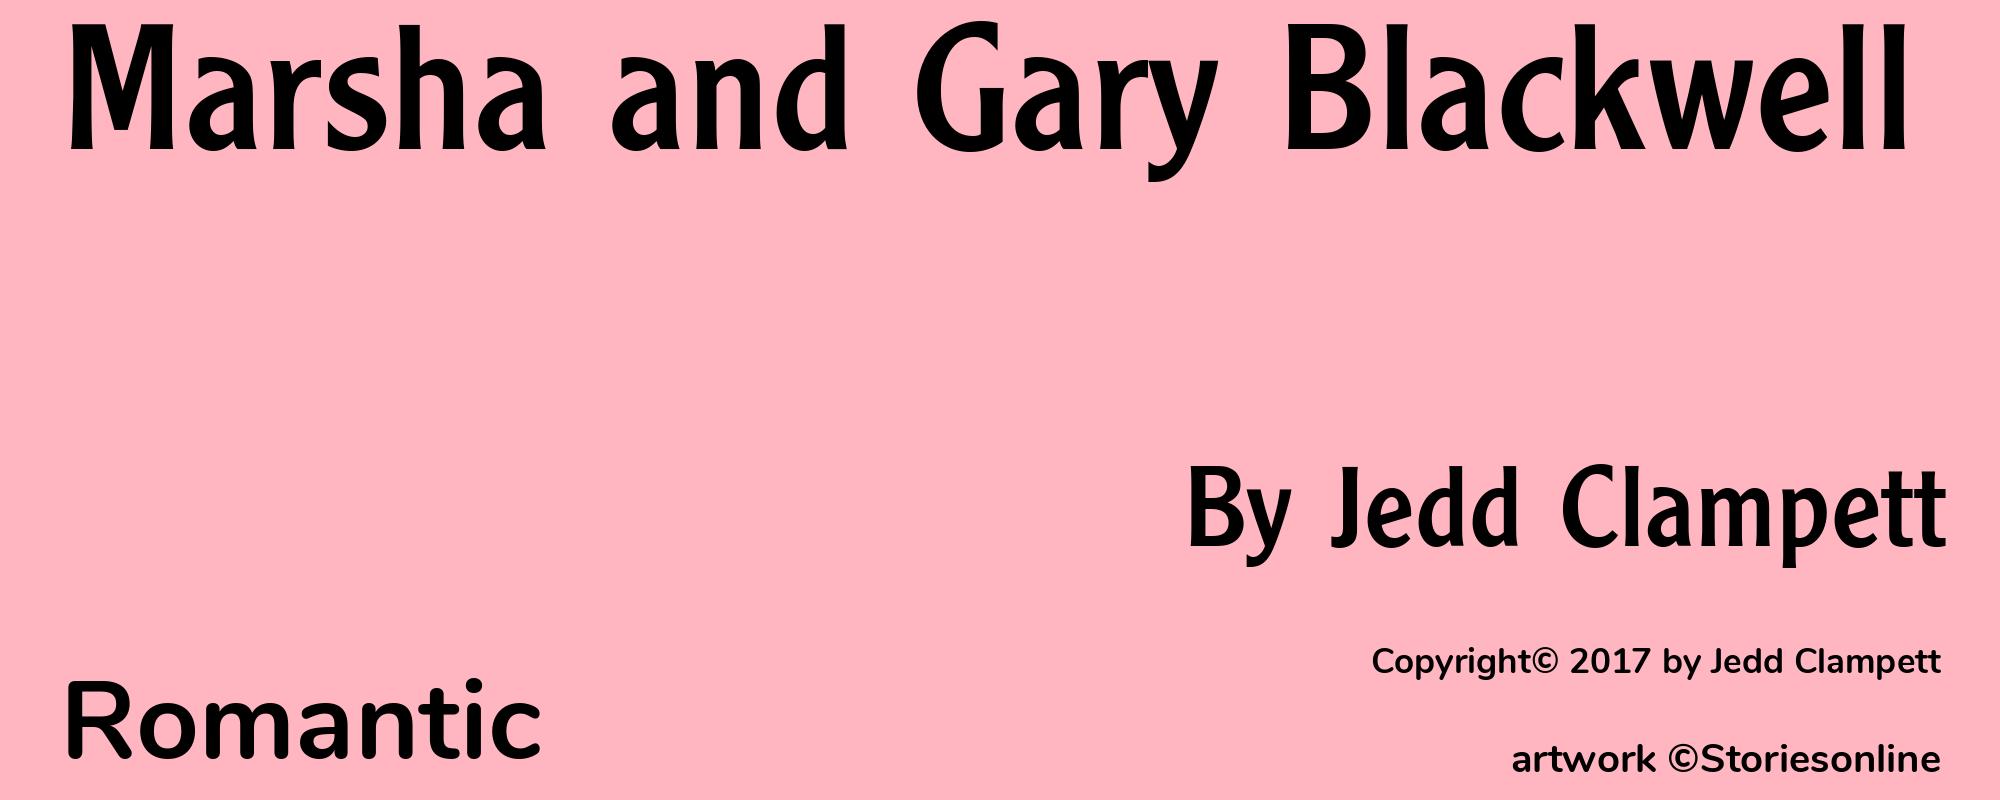 Marsha and Gary Blackwell - Cover